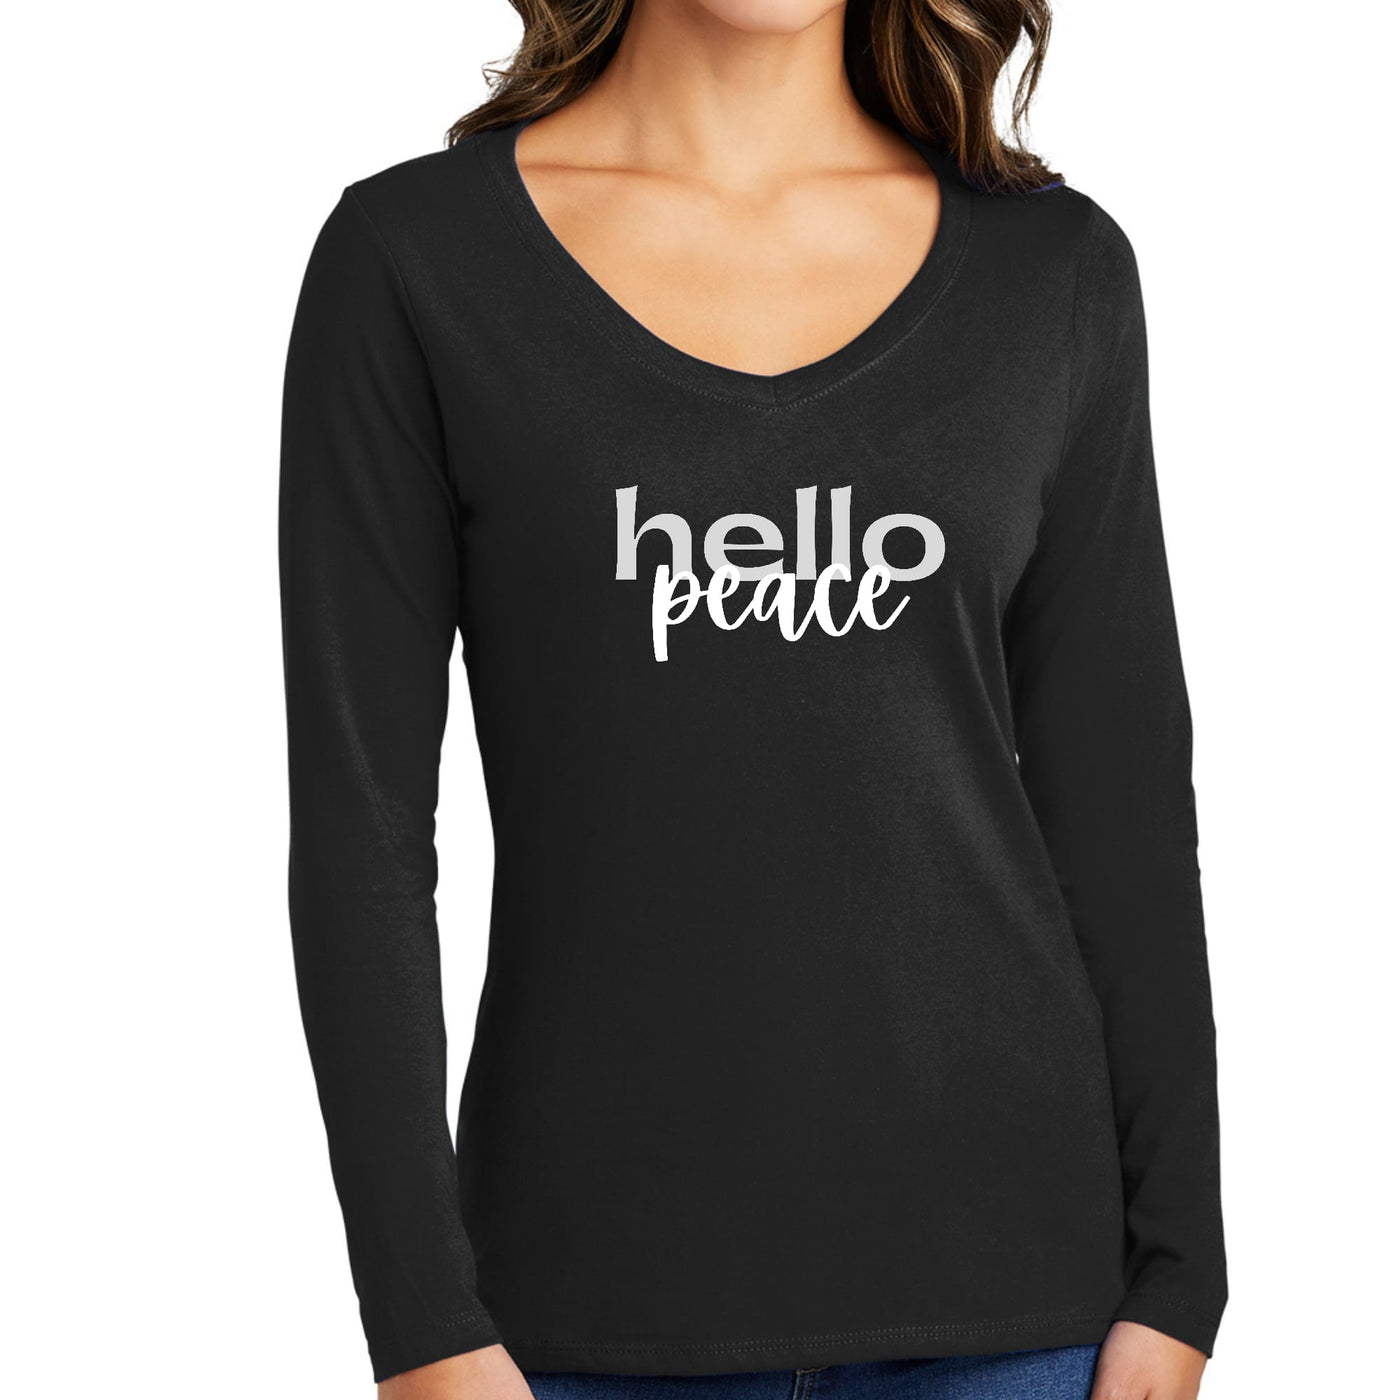 Womens Long Sleeve Graphic T - shirt Hello Peace Motivational Peaceful - Womens